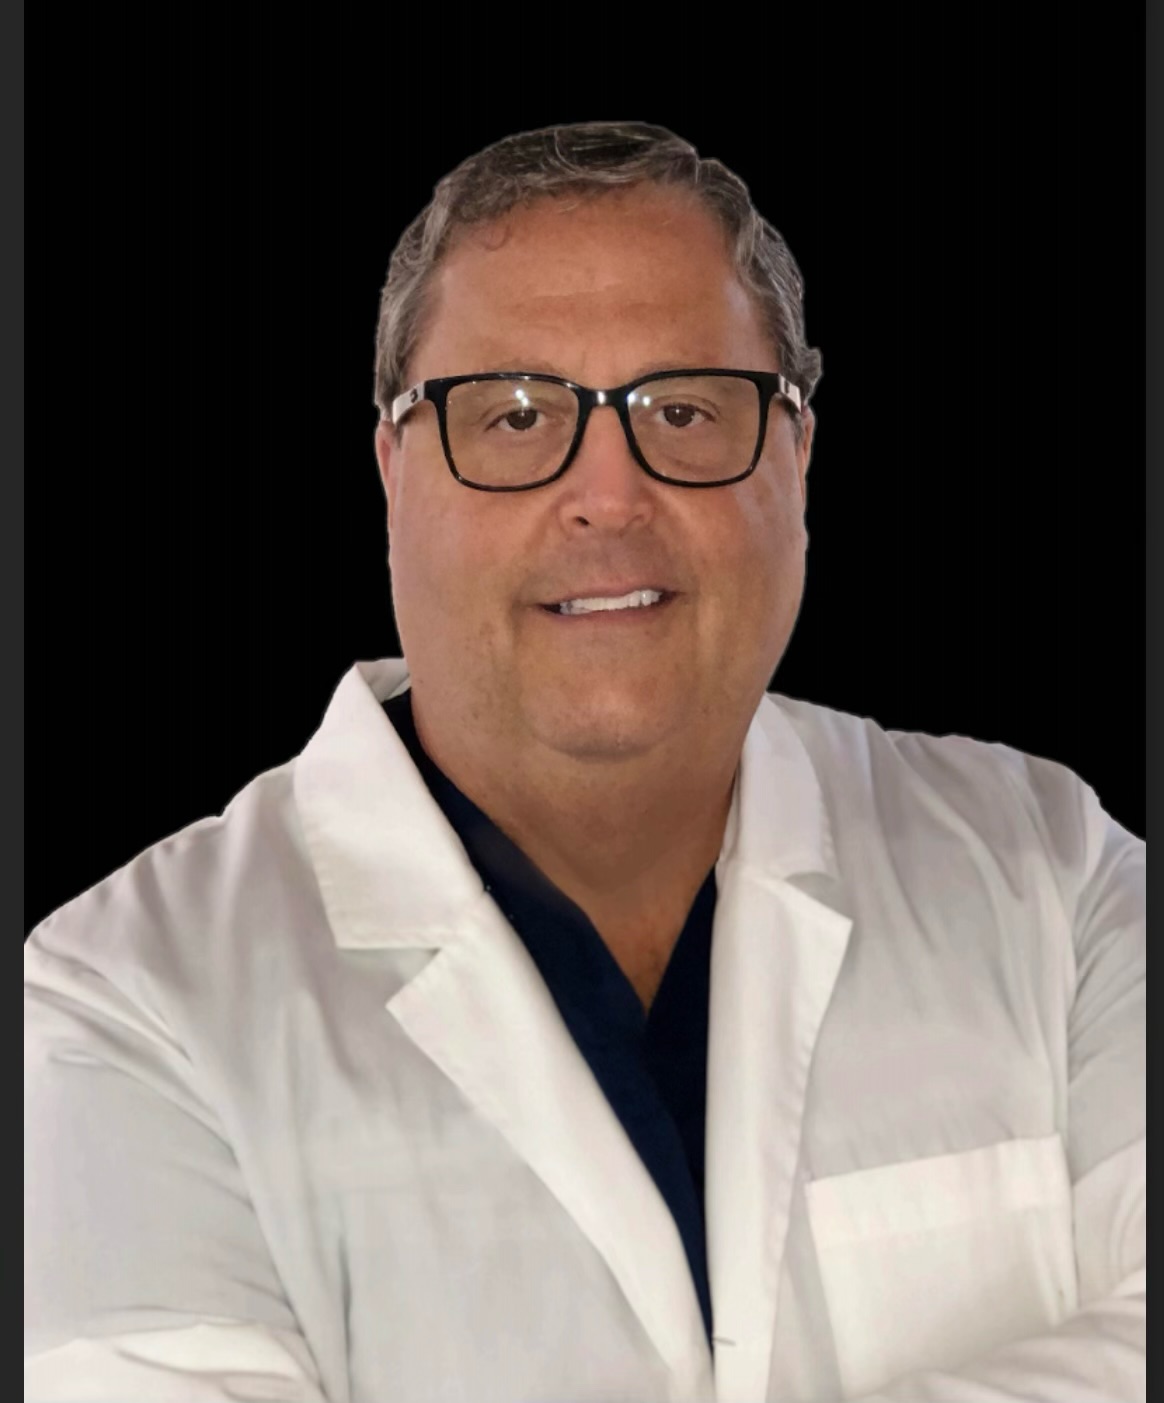 Dr. Arnold Fischler, top oral restoration dentist in New York since 1996.